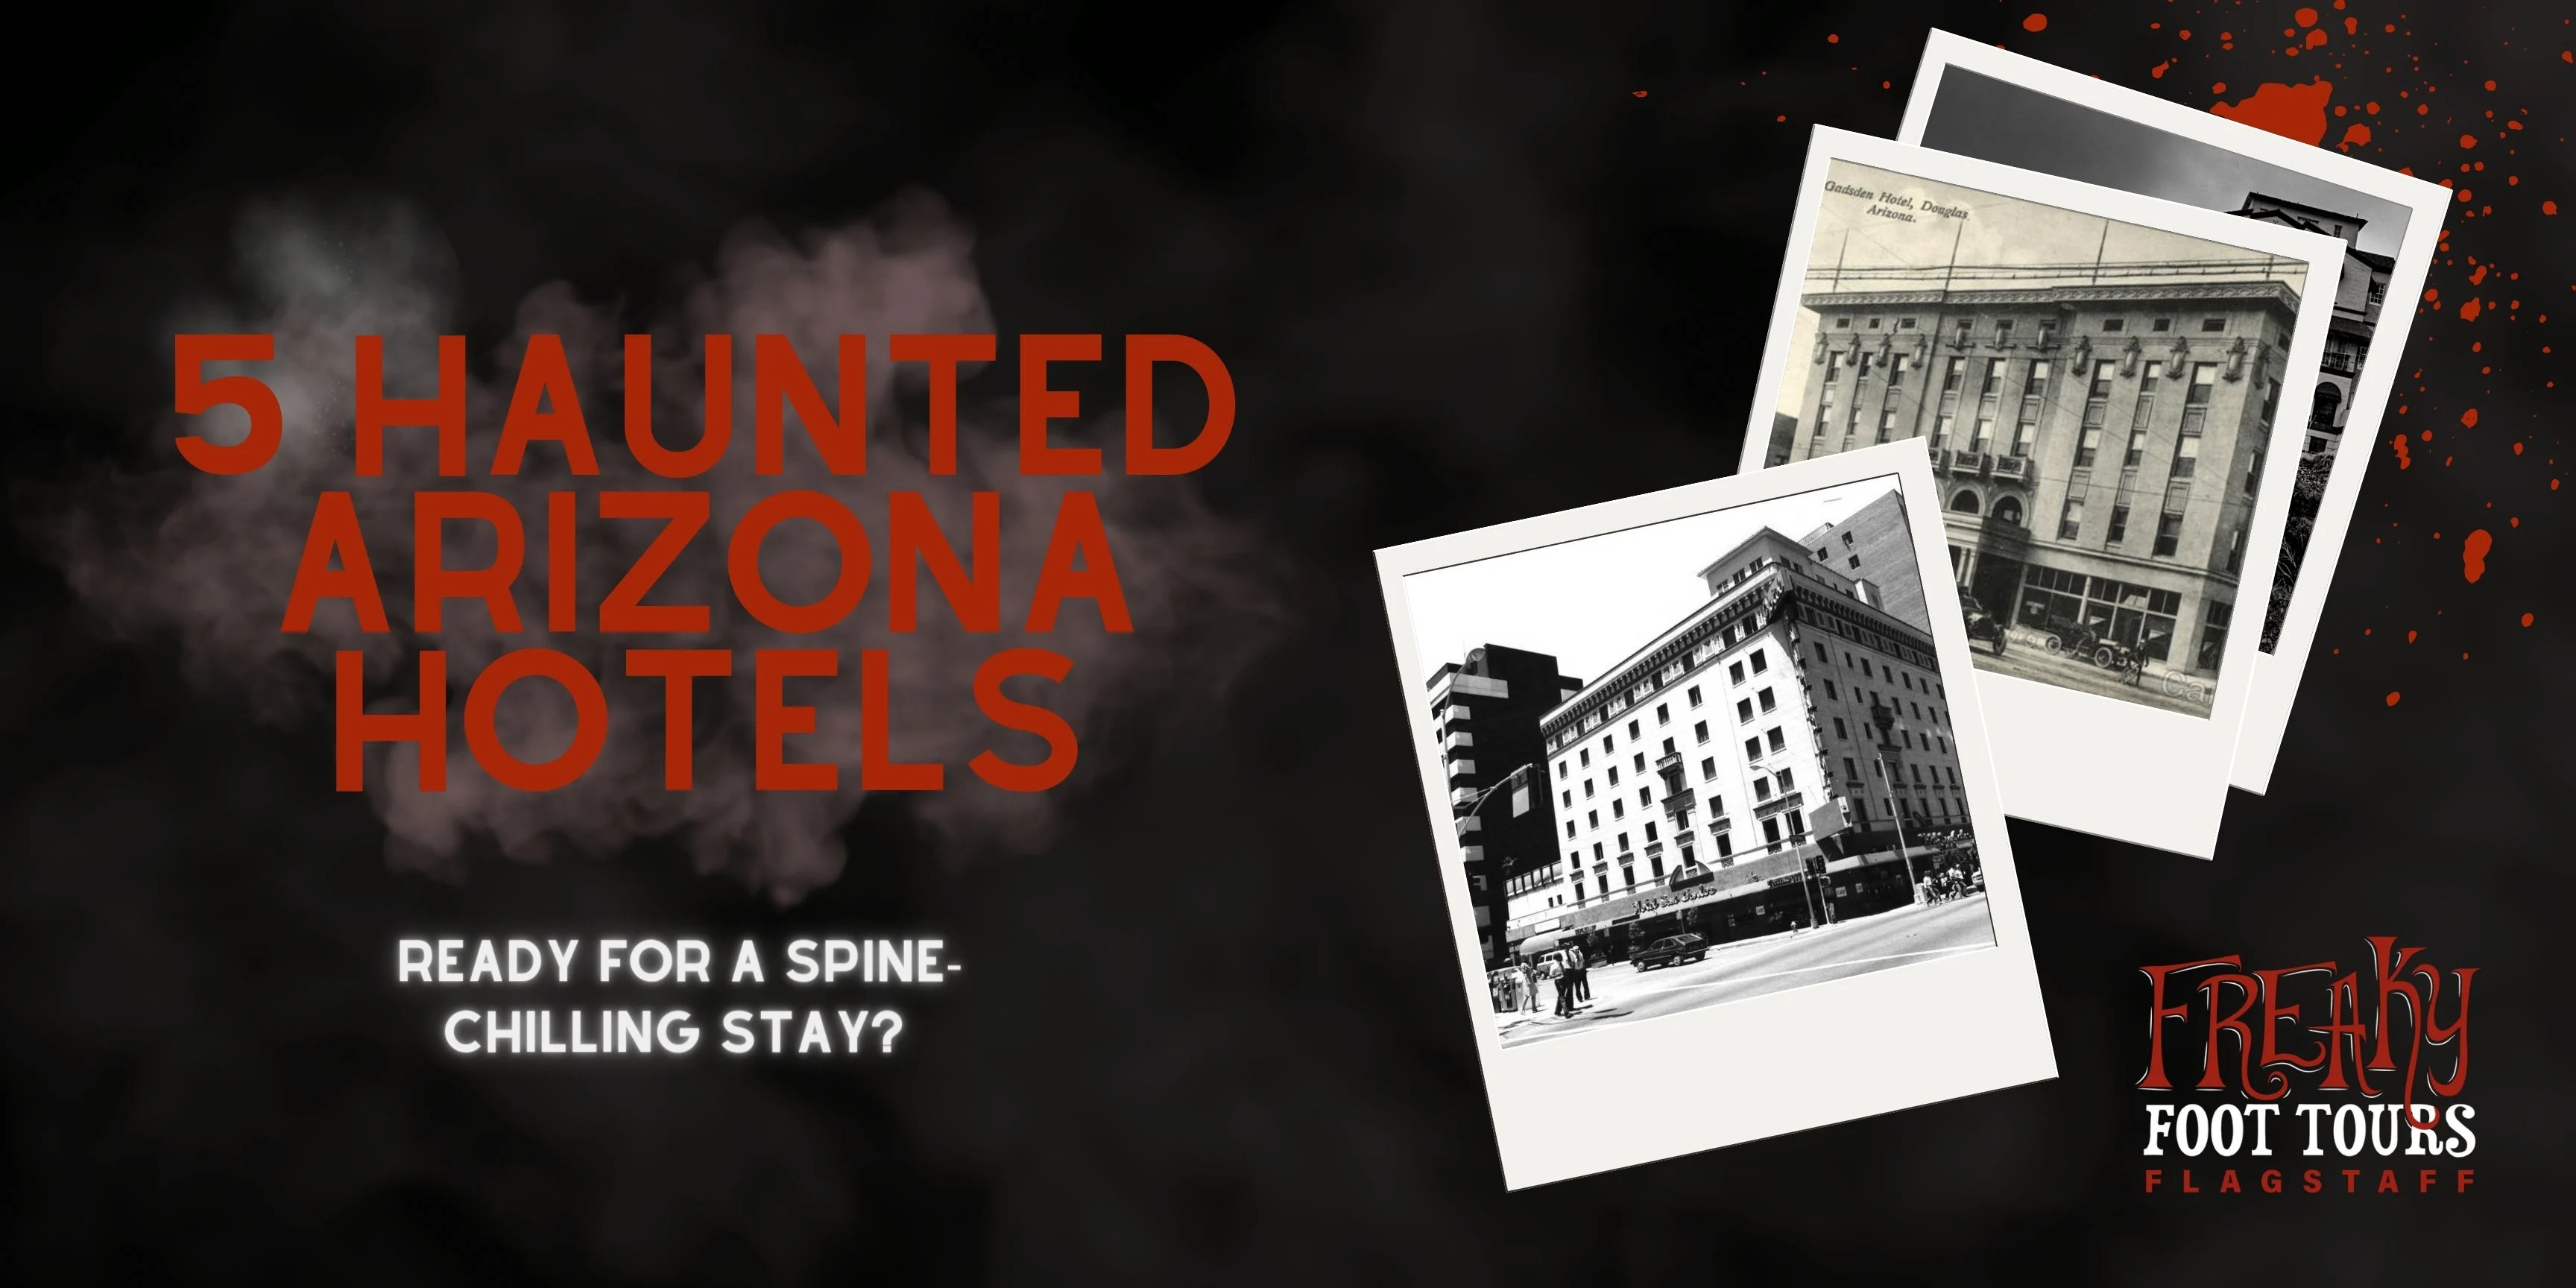 5 Haunted Arizona Hotels To Visit